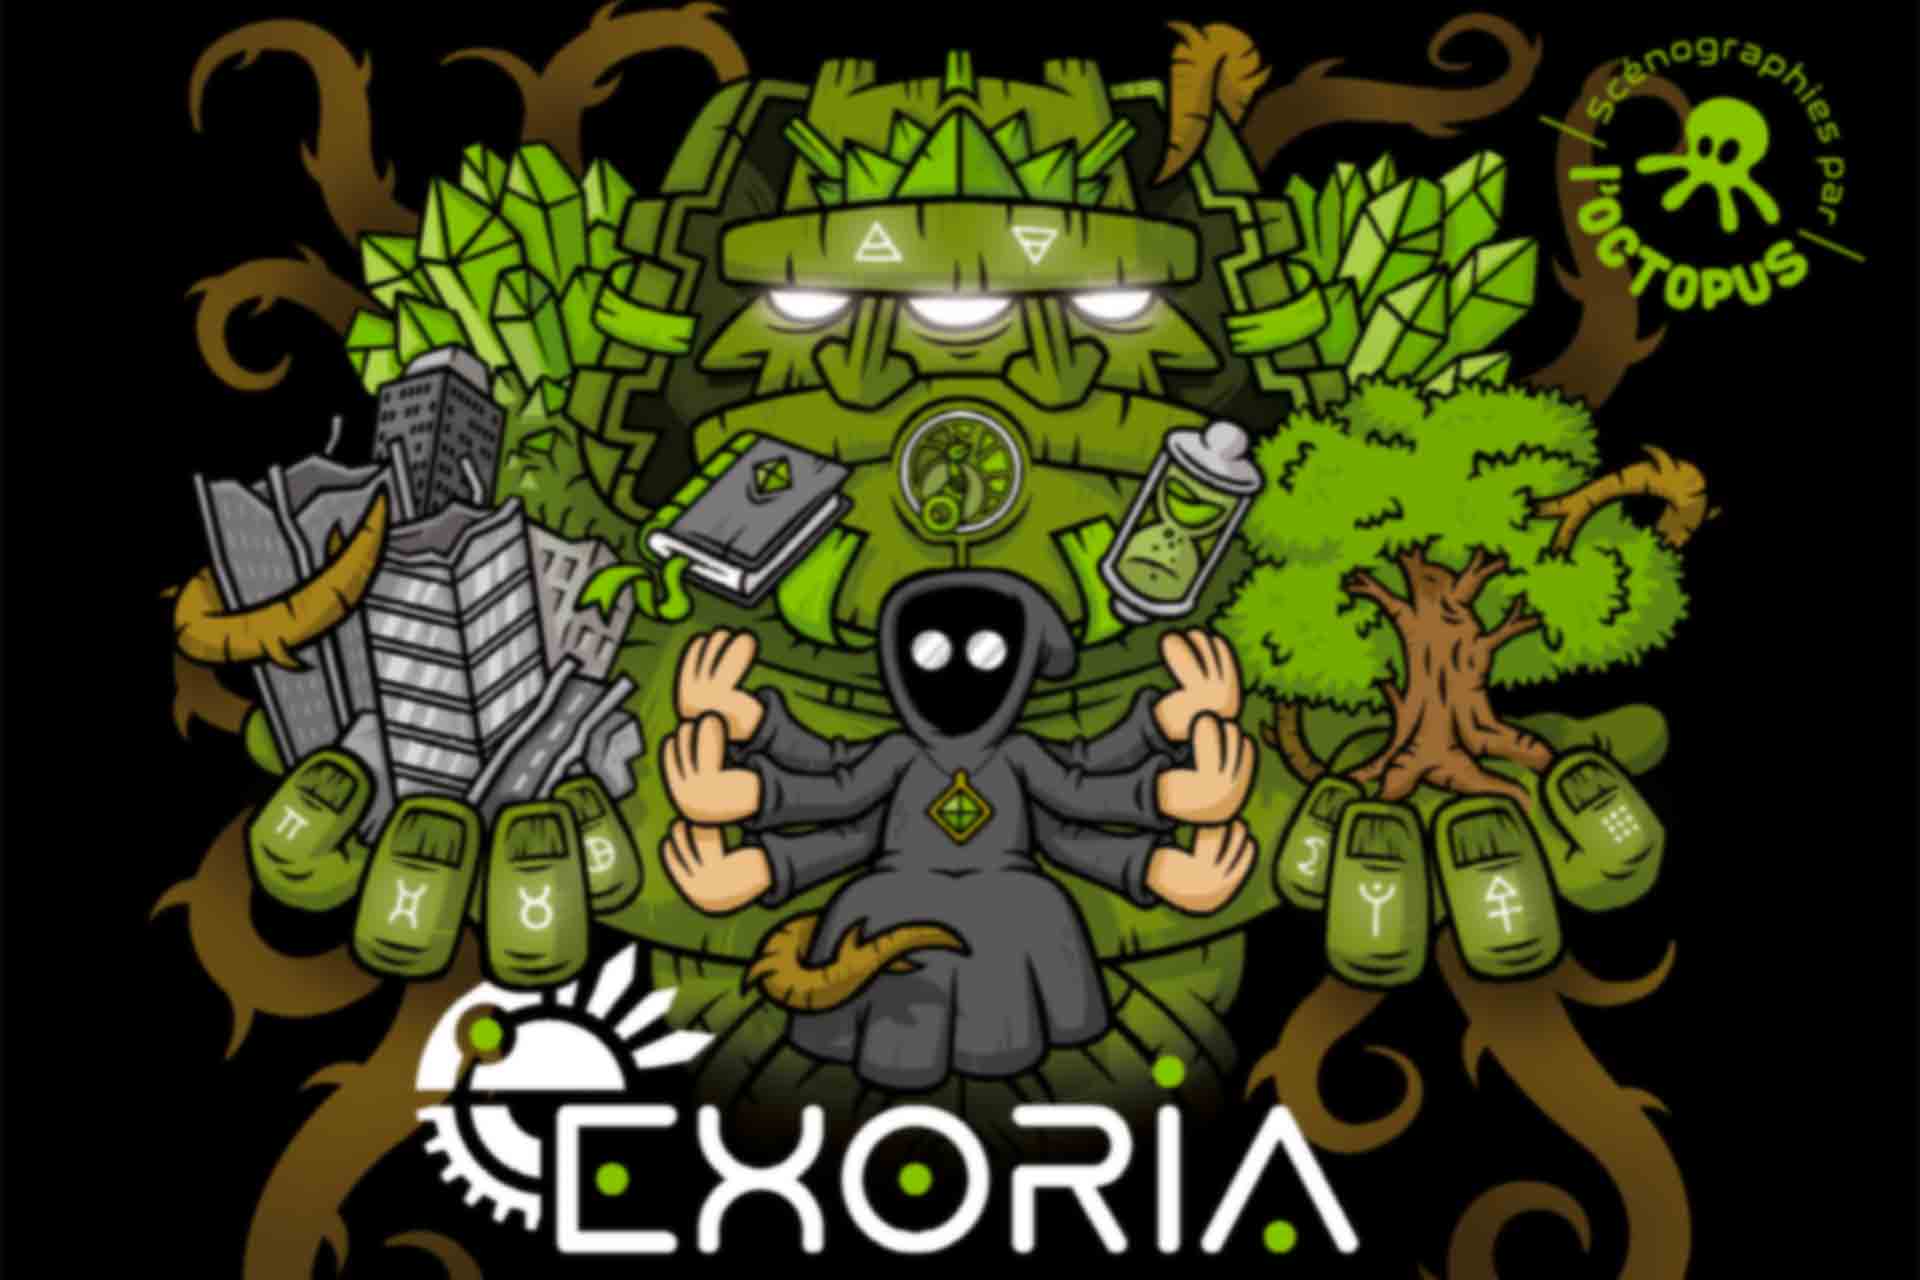 Exoria Festival